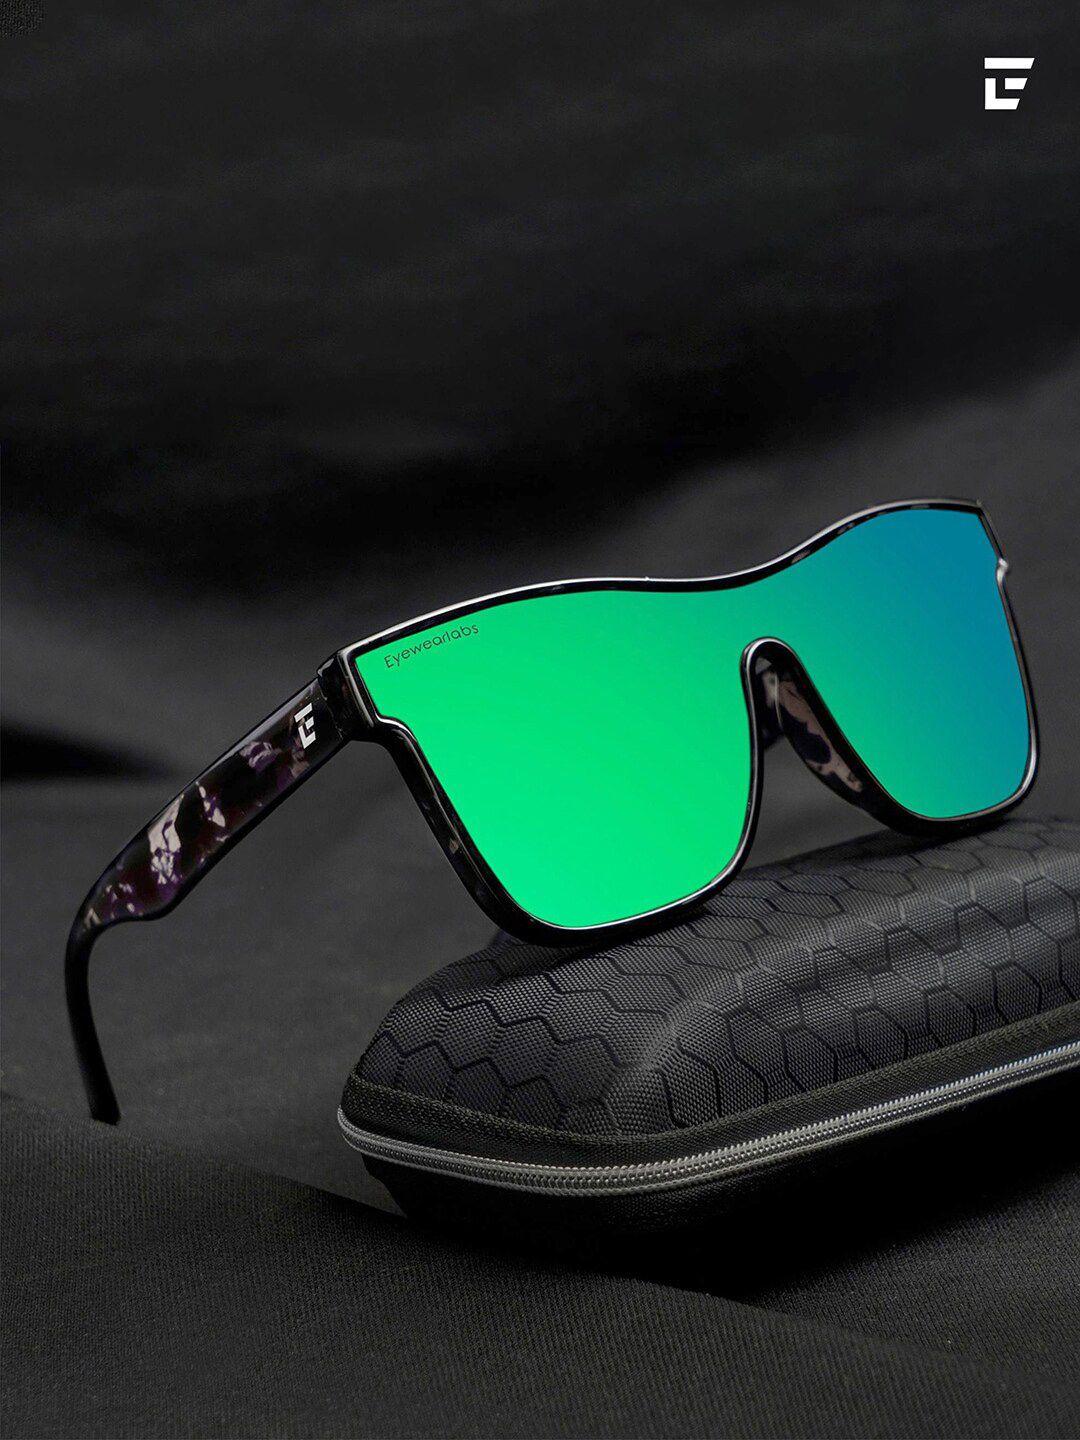 eyewearlabs unisex sports sunglasses with polarised lens